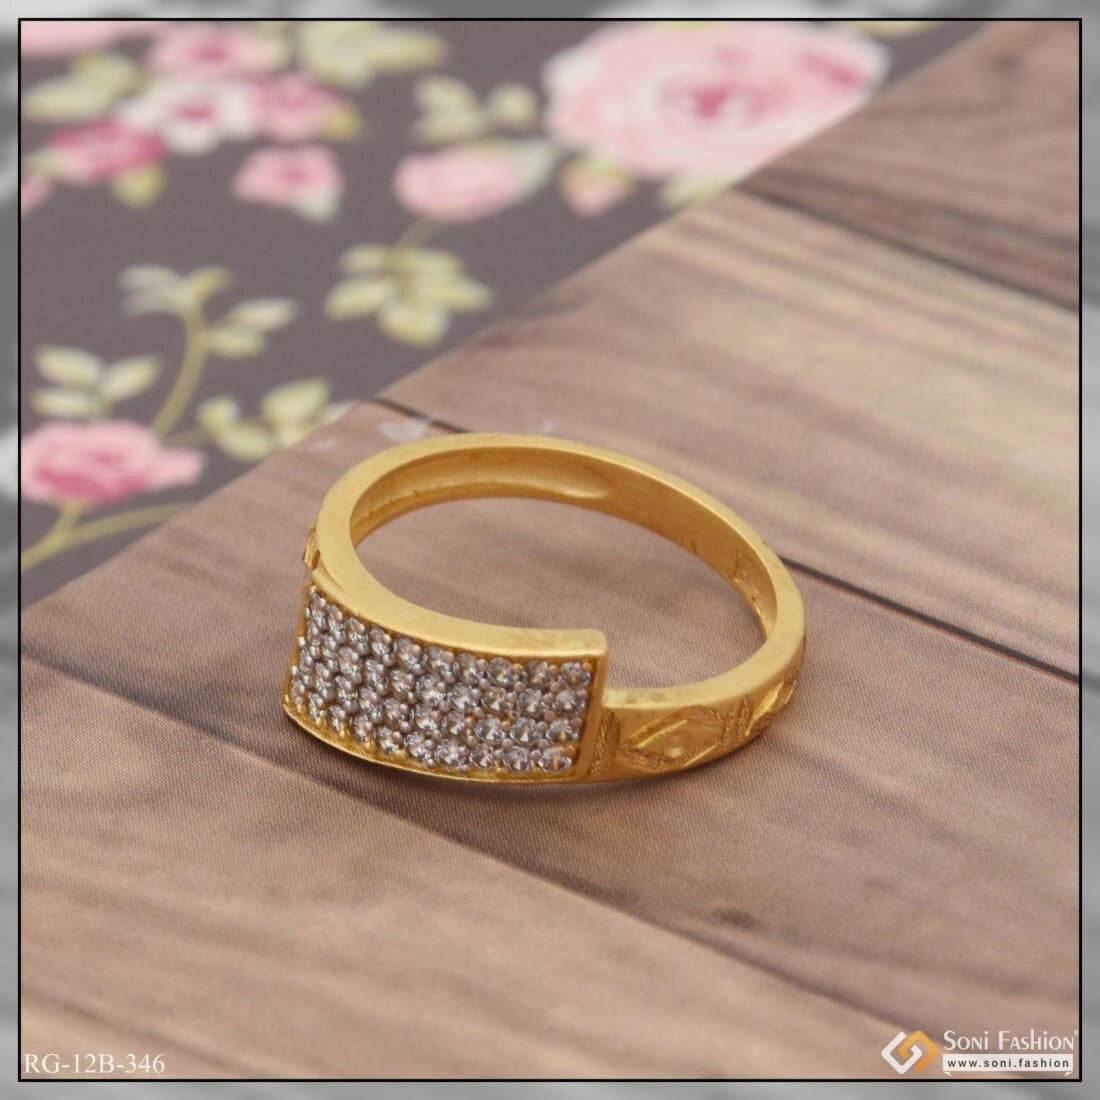 22k Gold Ring Beautiful Enameled Stone Studded Ladies Jewelry Select Size  Ring26 | eBay